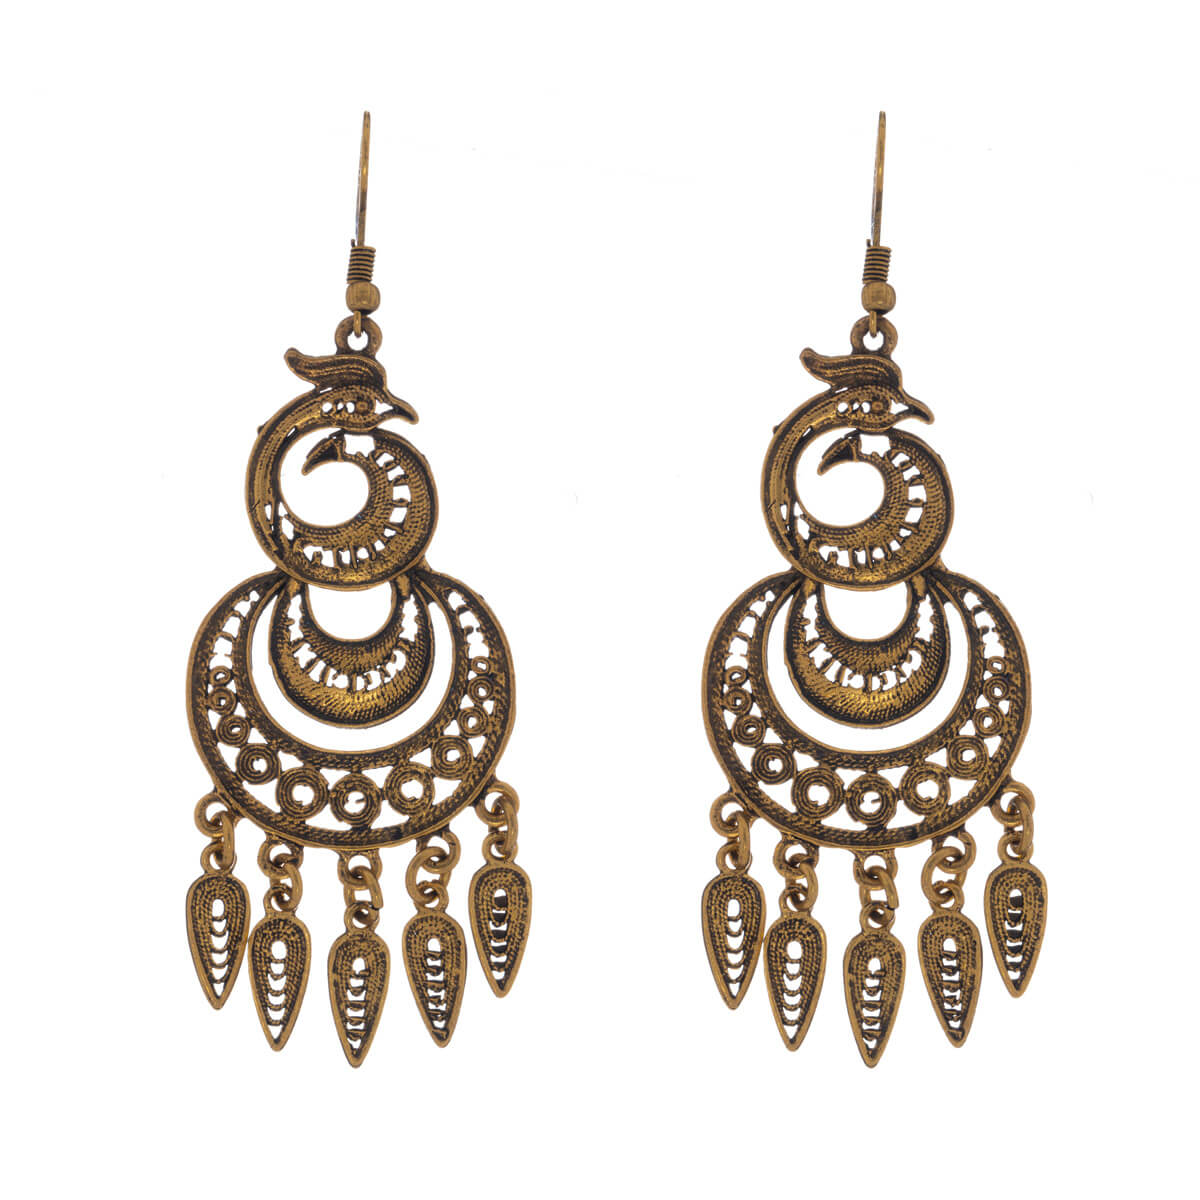 Impressive peacock earrings